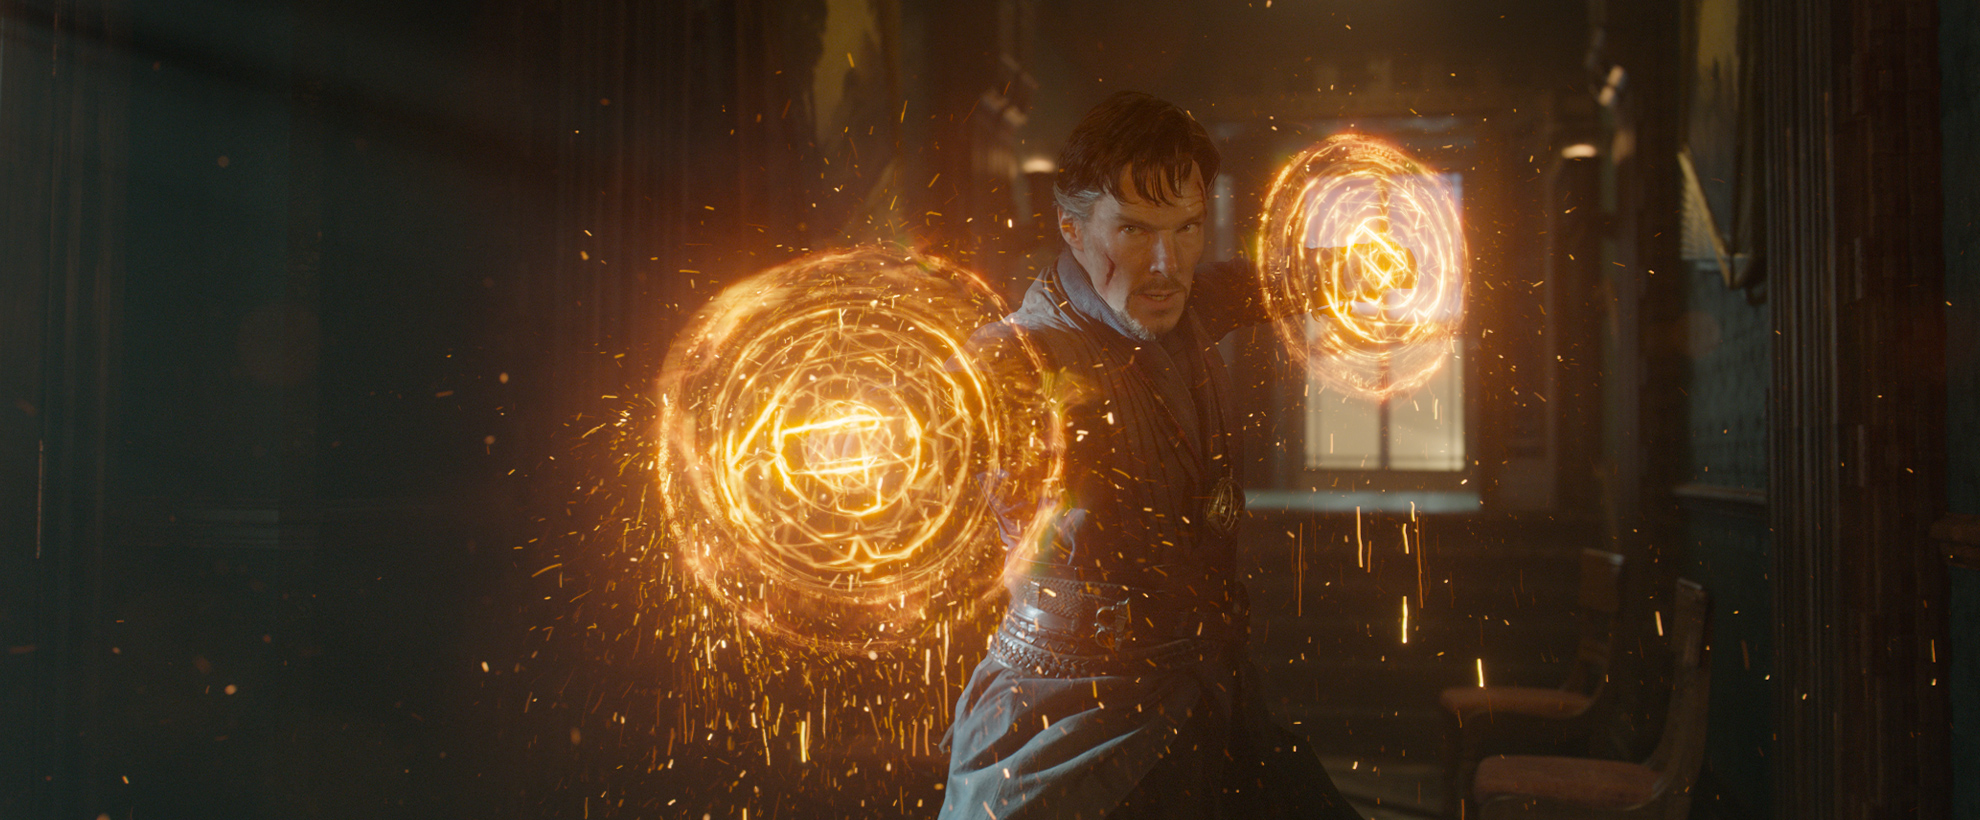 Benedict Cumberbatch as Doctor Strange, preparing for a fight